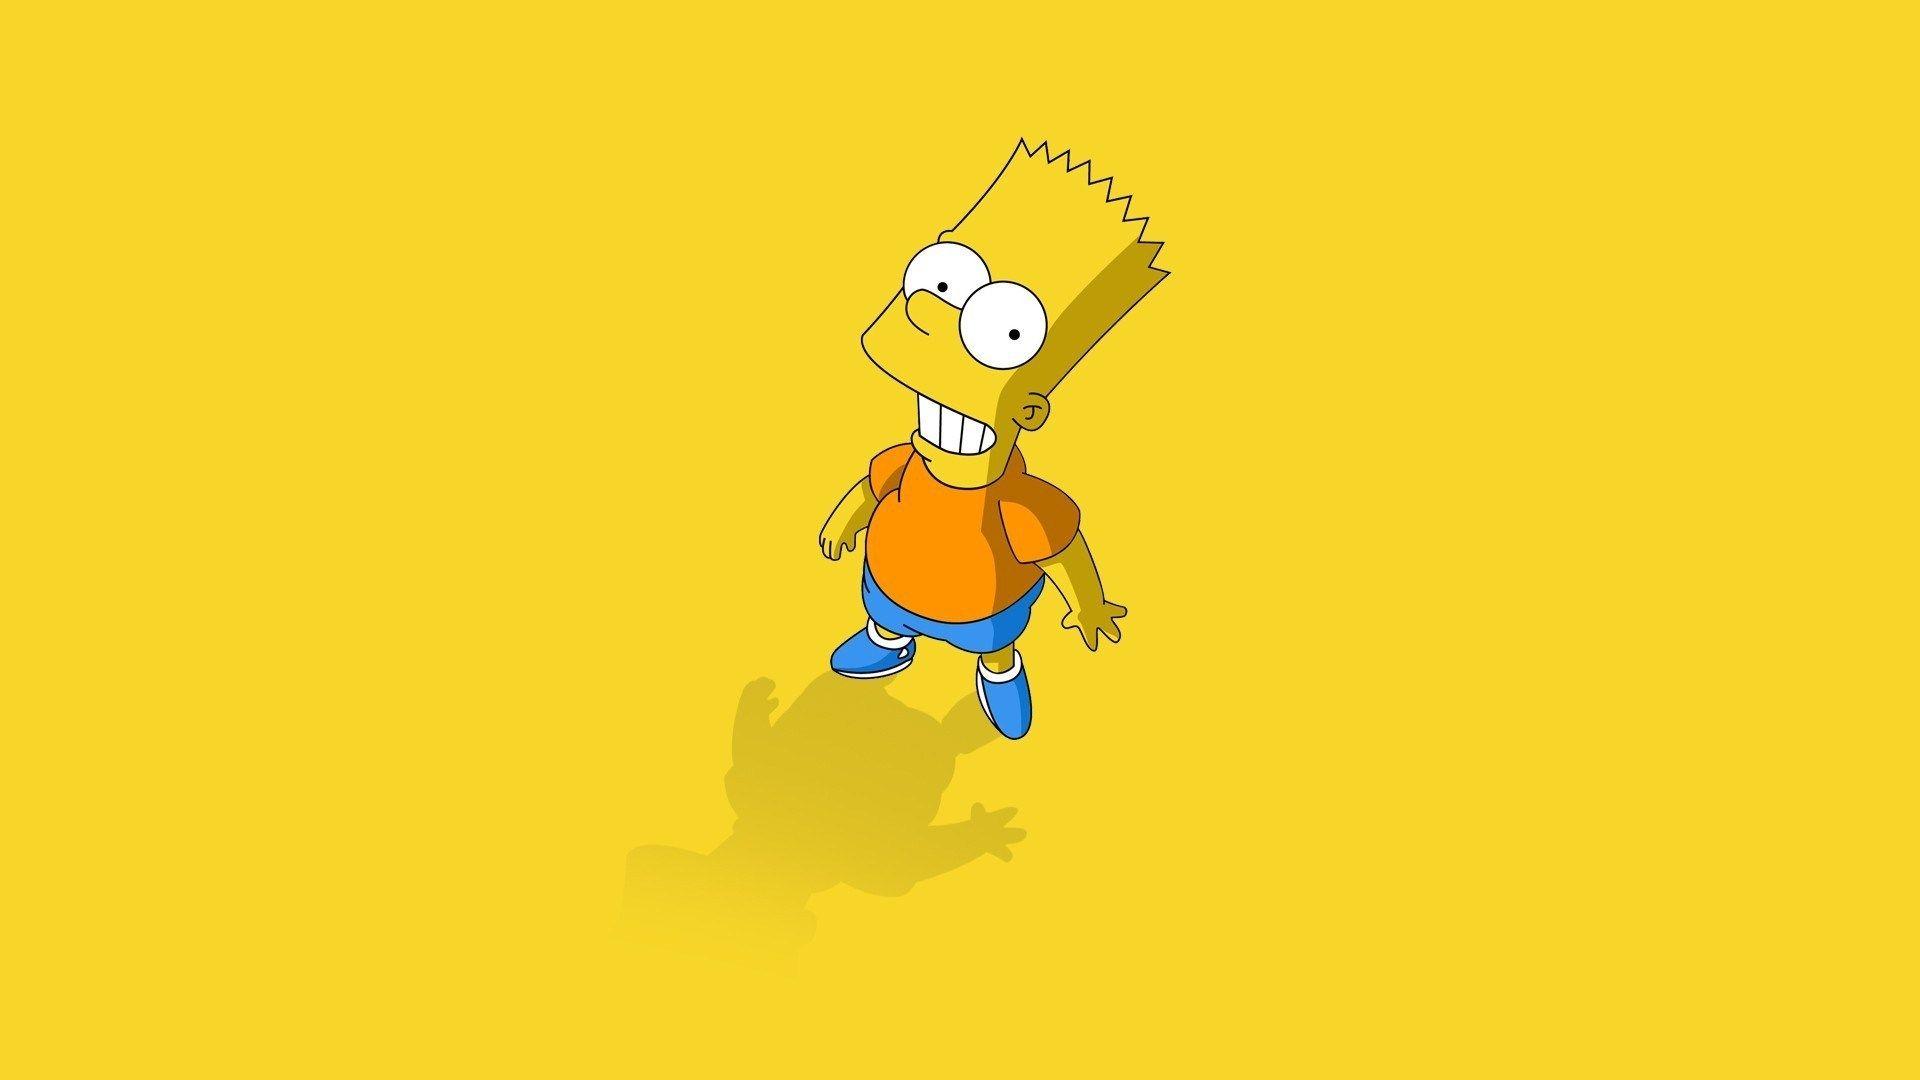 Simpsons Bart Wallpaper 45795 1920x1080 px